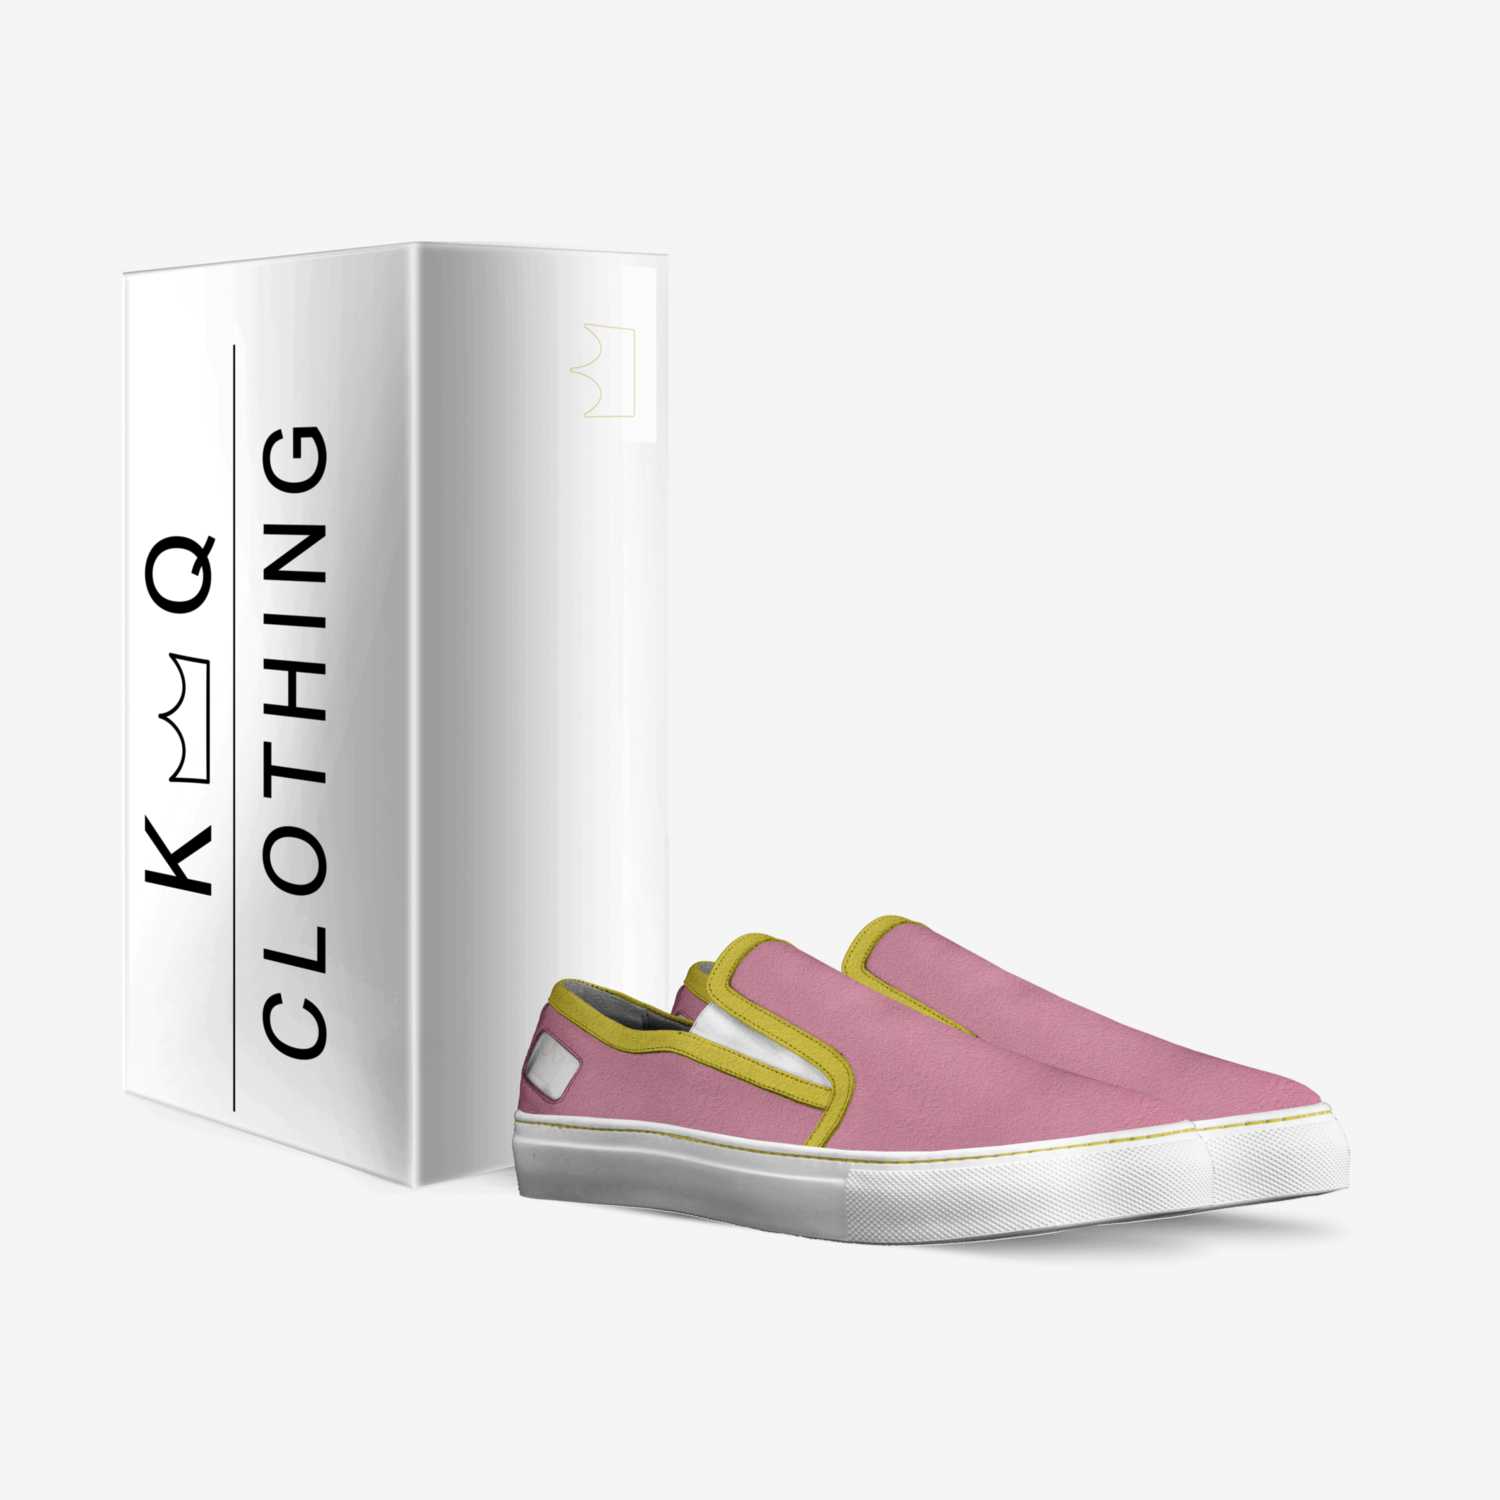 KQ Clothing custom made in Italy shoes by Khari Mcmanus | Box view